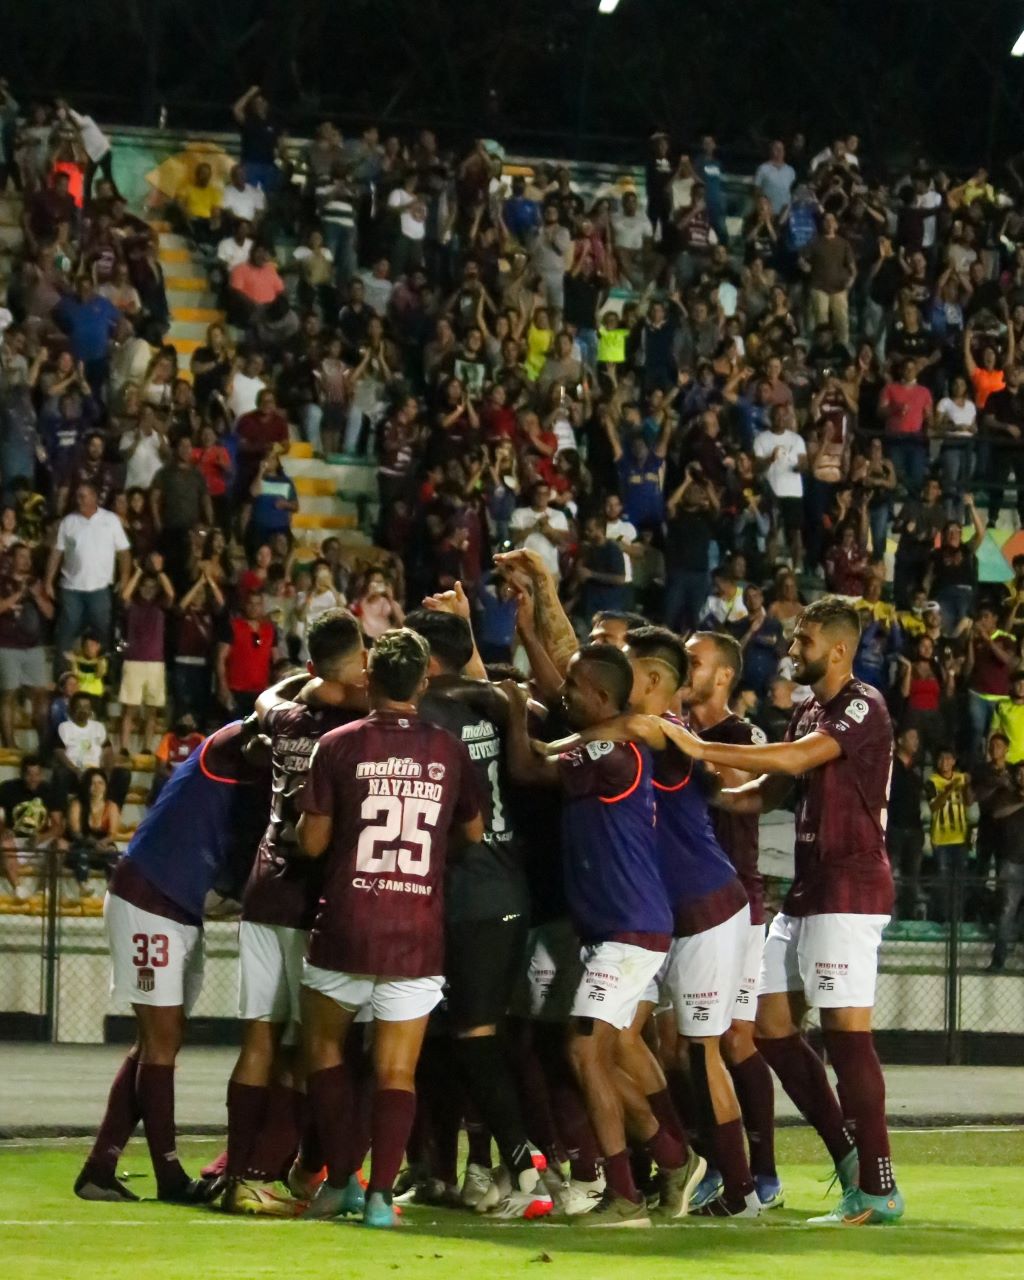 Carabobo FC regresa a Copa Libertadores - noticiacn